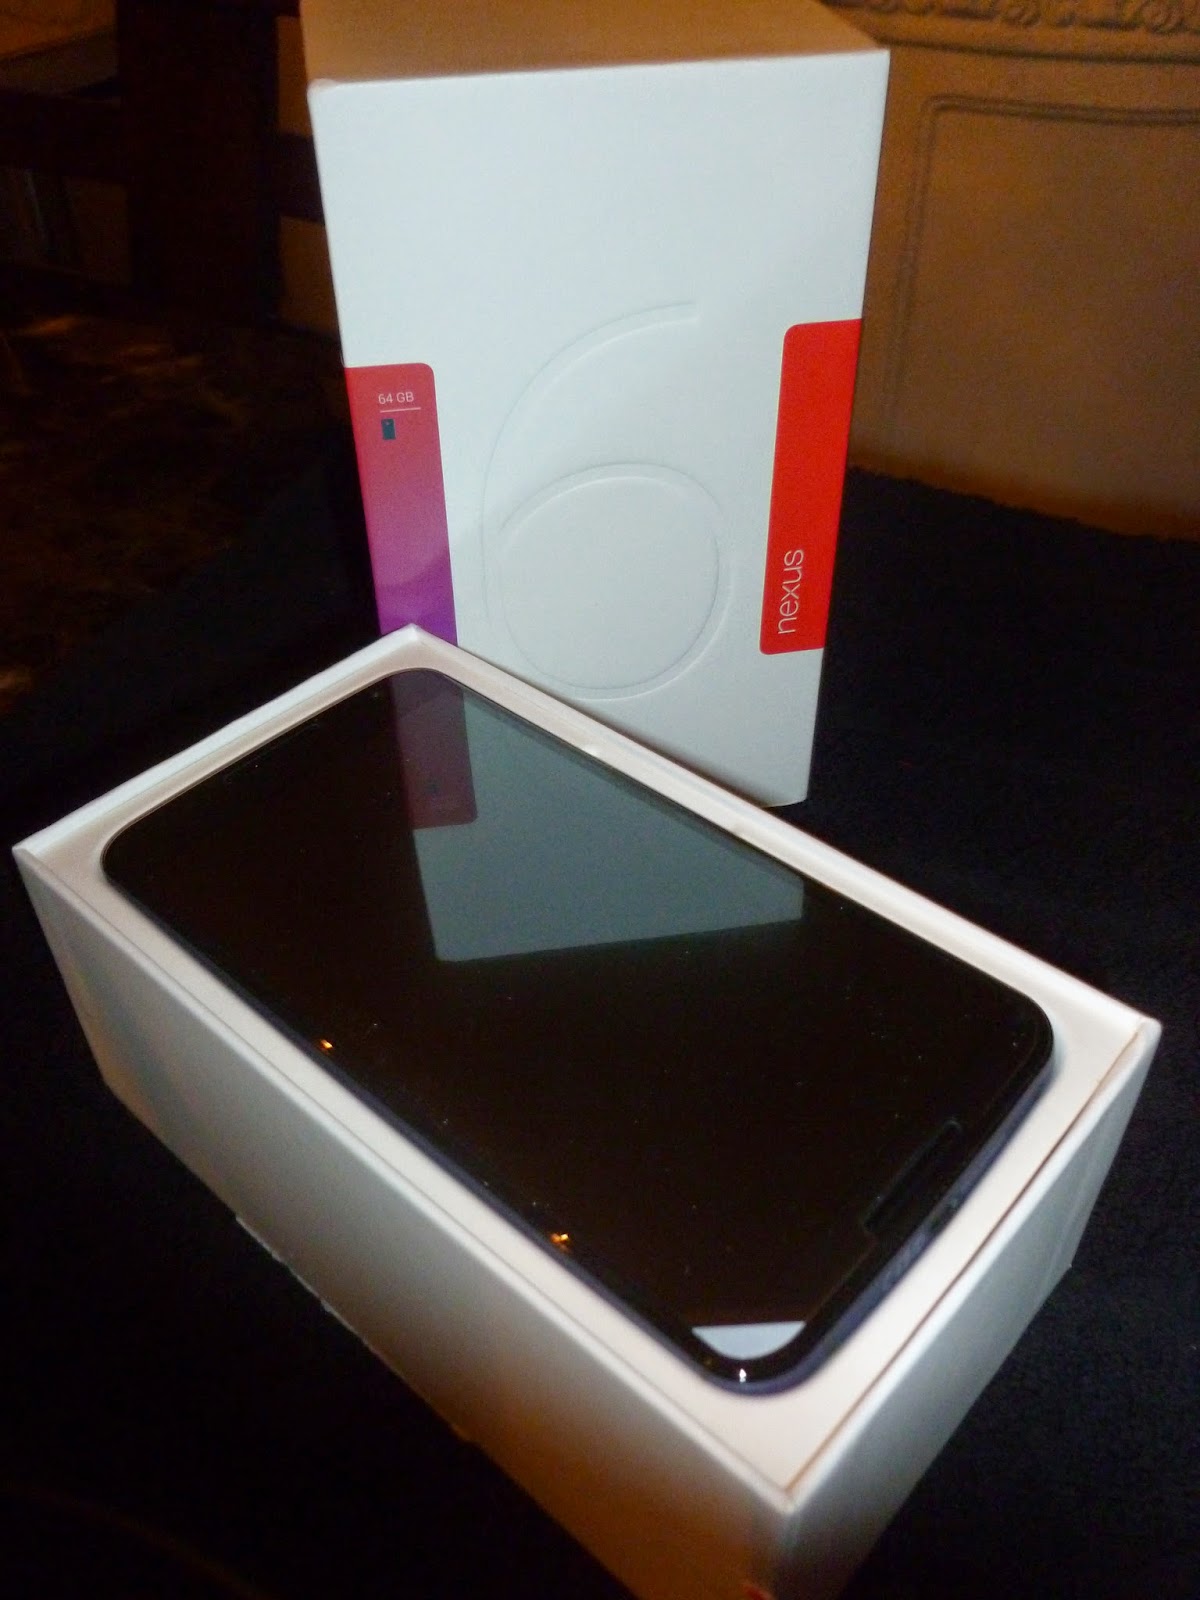 Nexus 6 after opening box